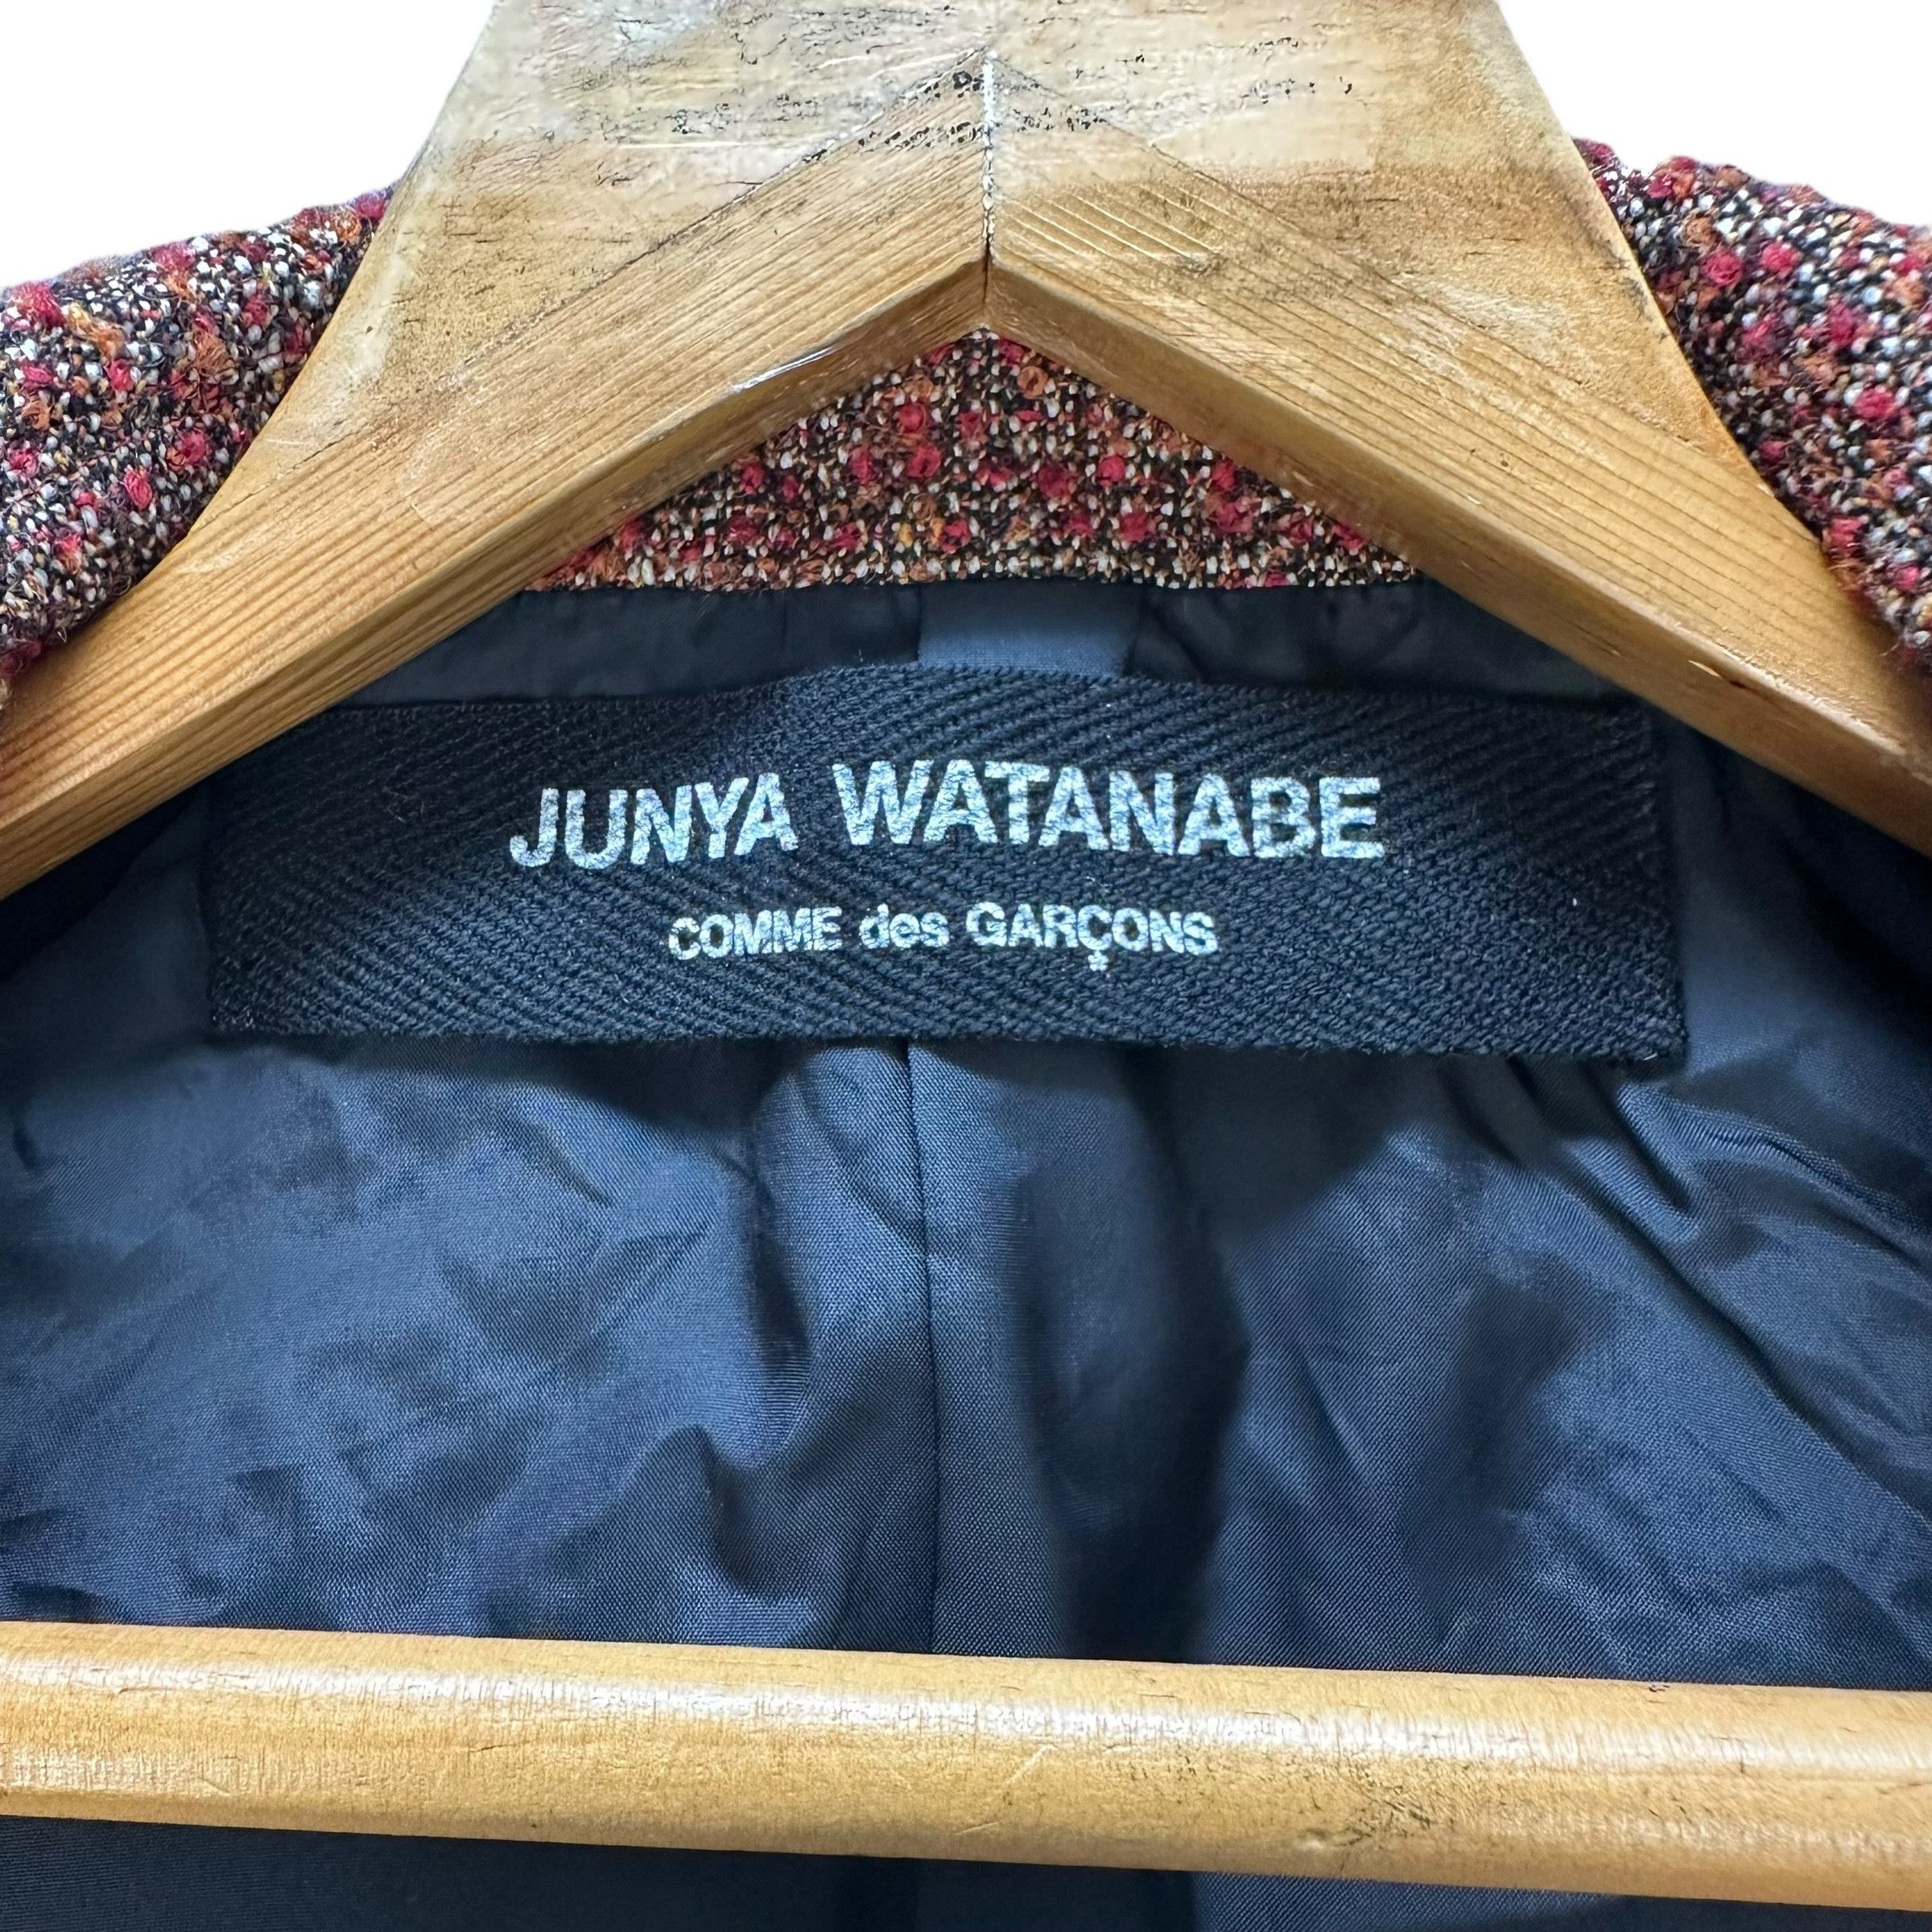 Junya Watanabe Comme des Garcons Tweed Jacket #9163-64 - 7